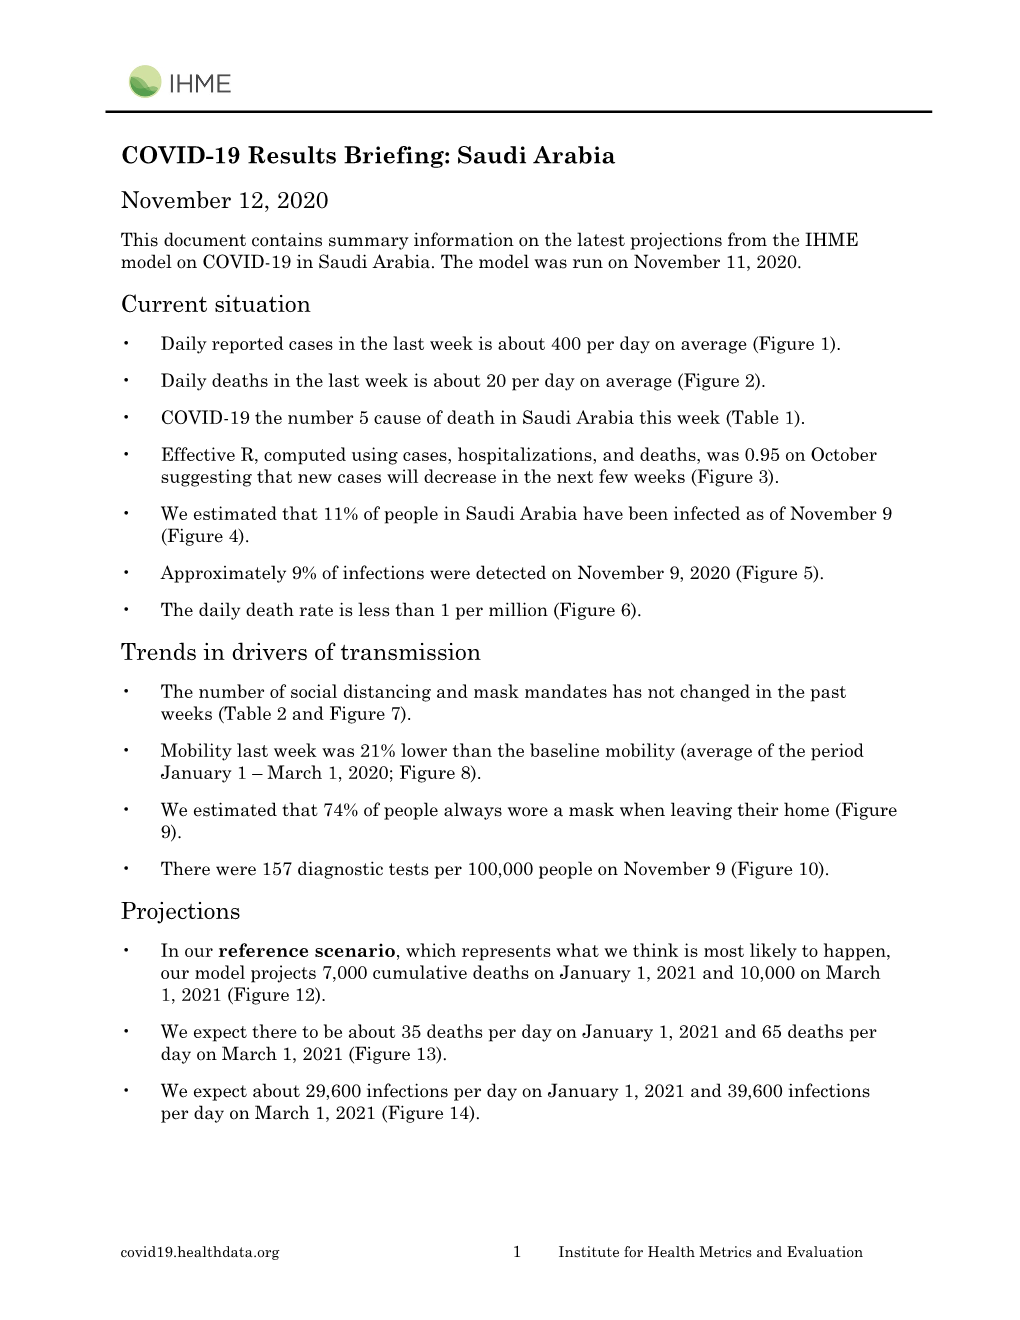 COVID-19 Results Briefing: Saudi Arabia November 12, 2020 Current